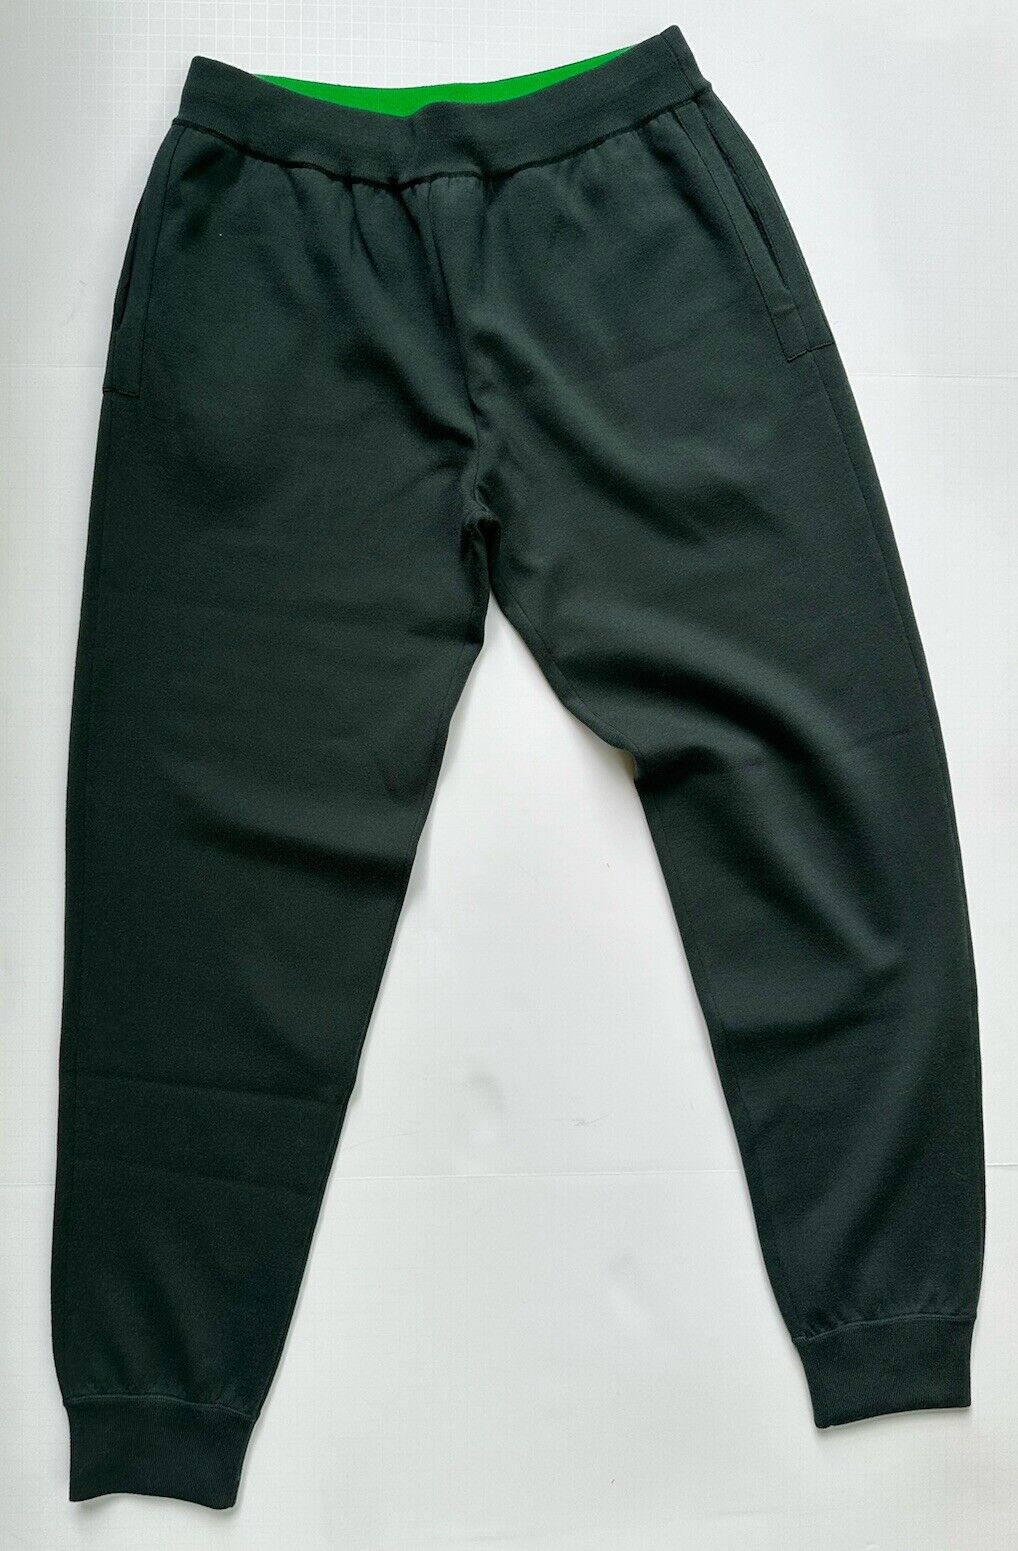 Bottega Veneta Lightweight Double Merino Wool Jogger Trousers Pants L 690224